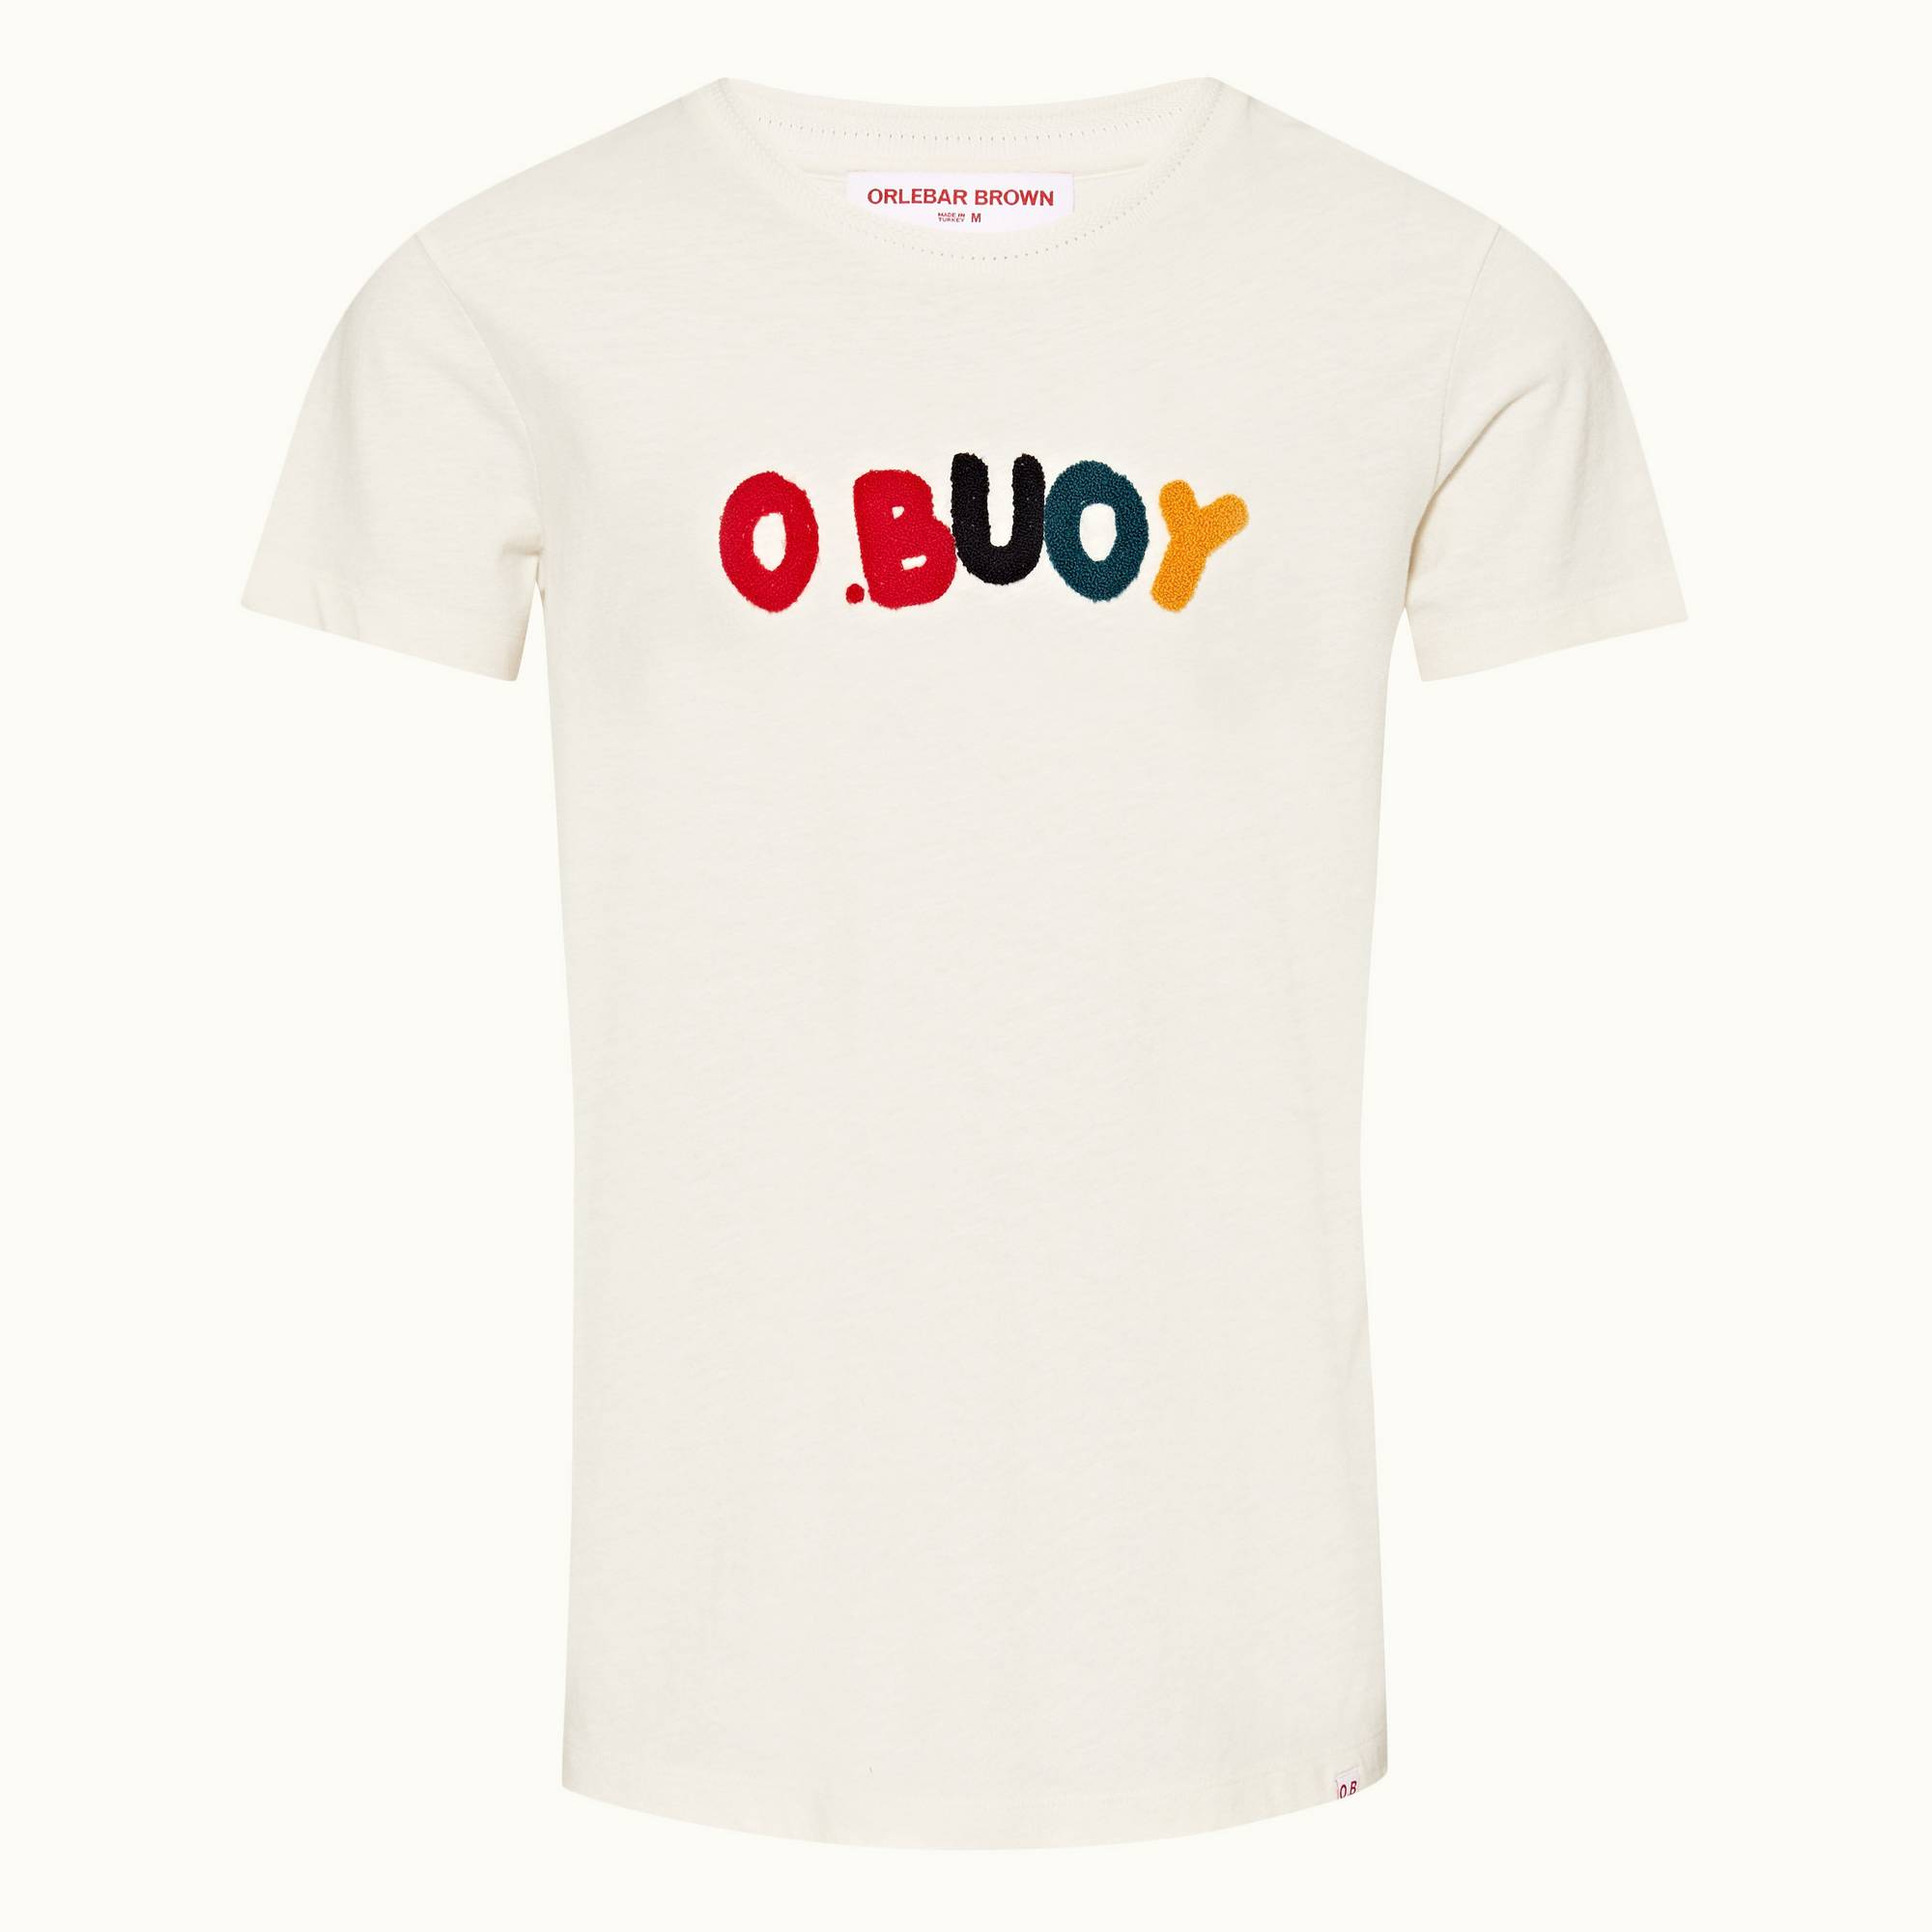 Ob Classic - Mens White Sand O.BUOY Classic Fit Short-Sleeve Cotton-Linen T-shirt